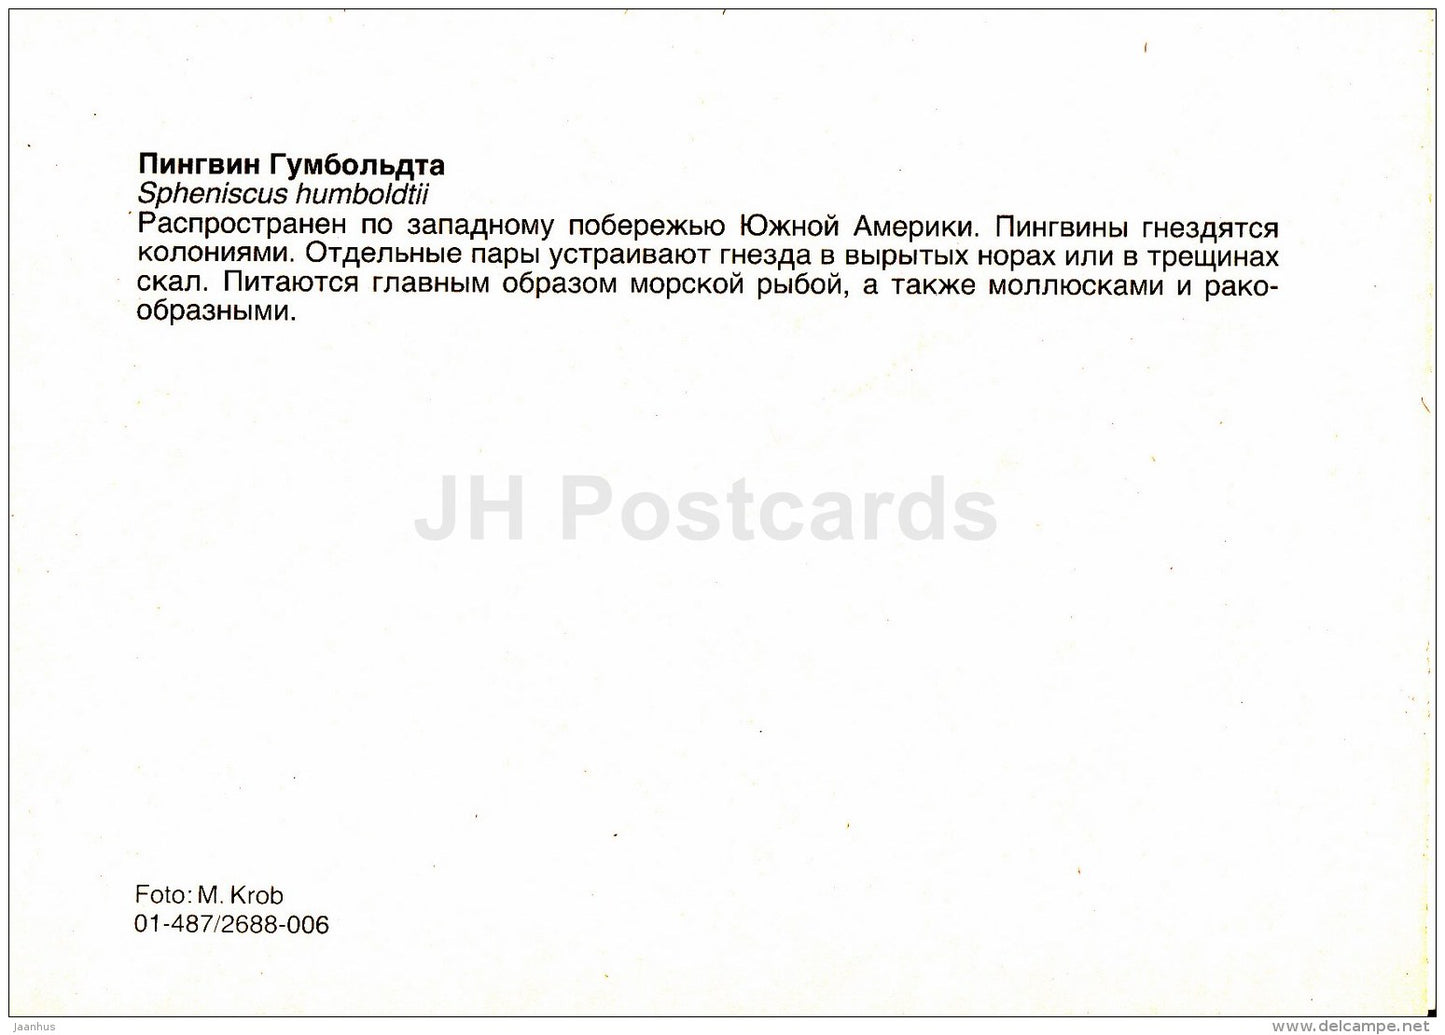 Humboldt penguin - Spheniscus humboldti - birds - Zoo - Czechoslovakia - unused - JH Postcards